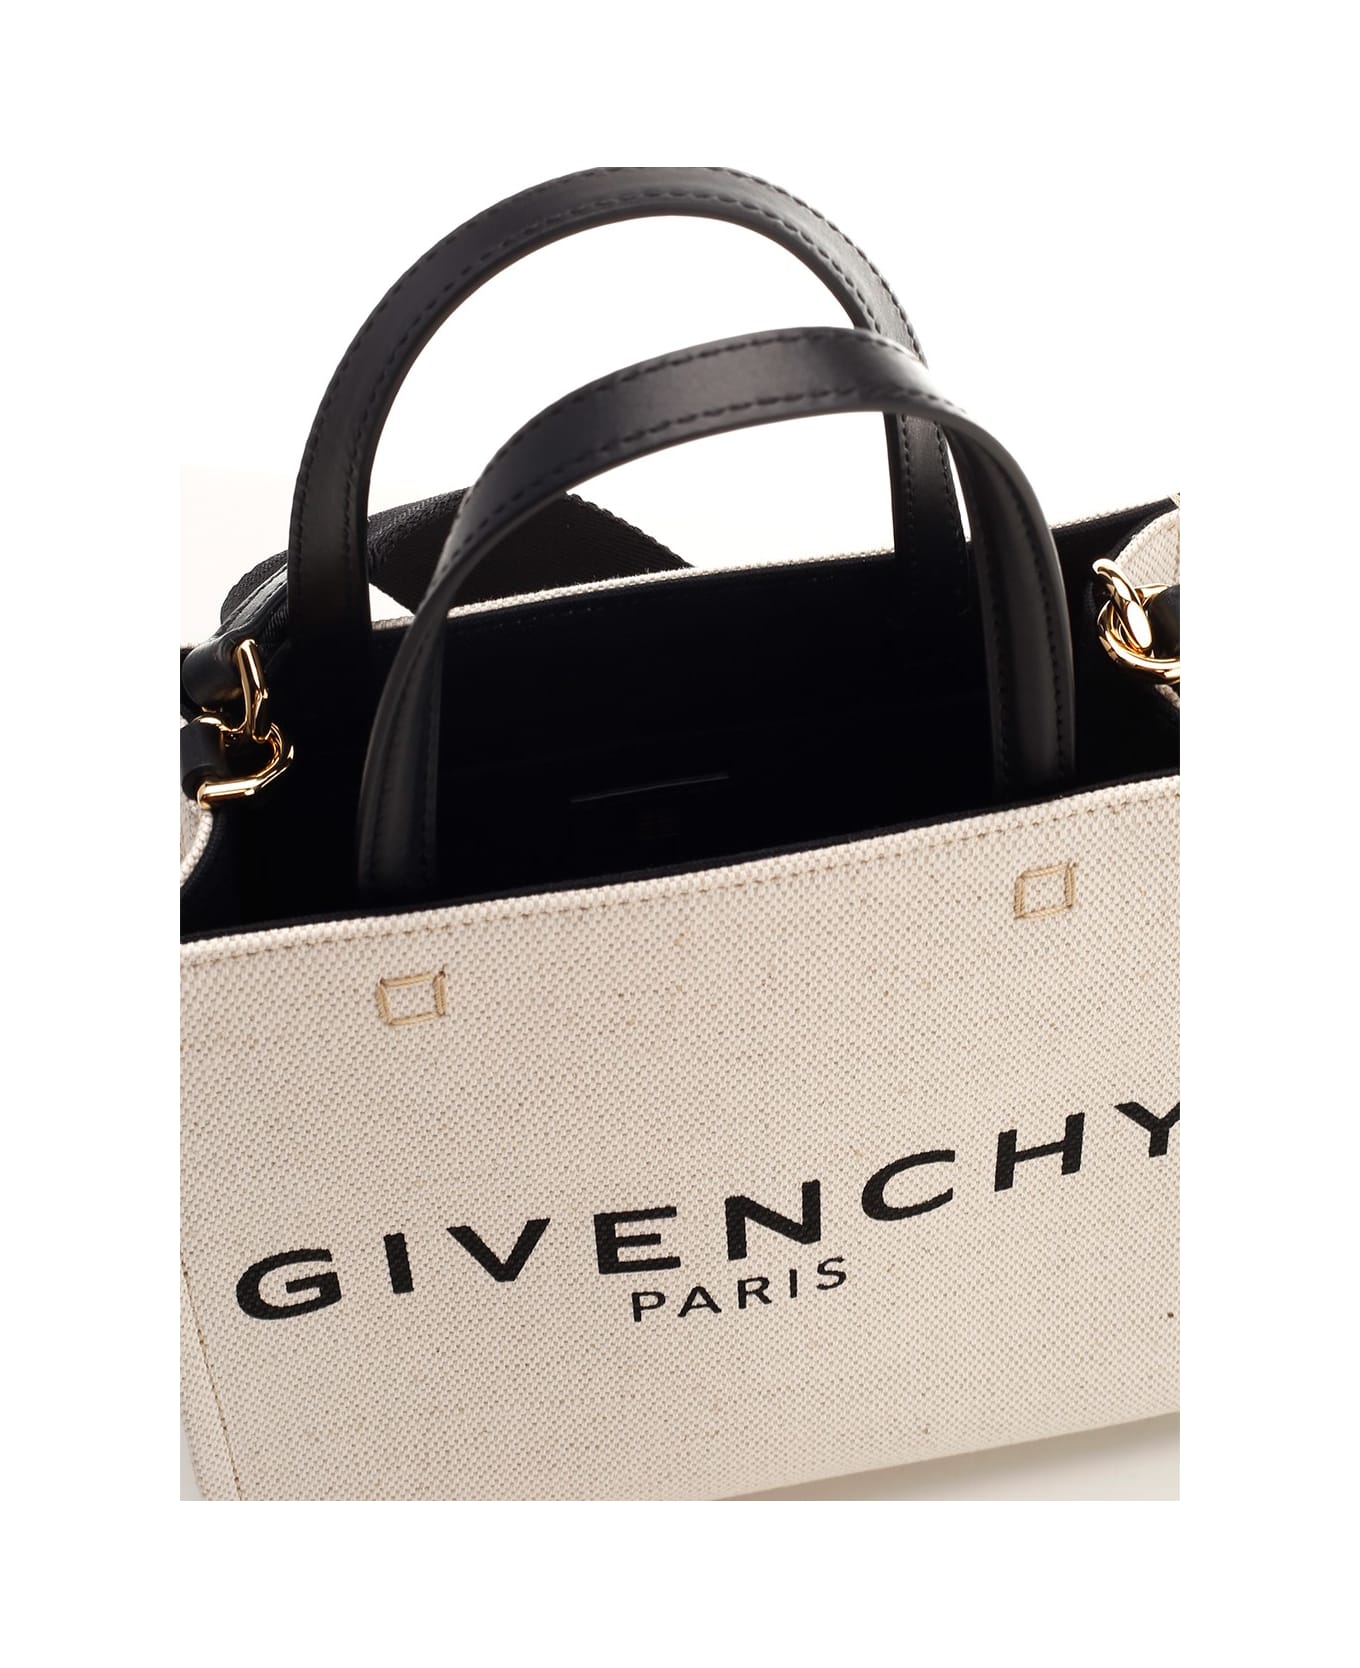 Givenchy 'g' Mini Tote - Beige